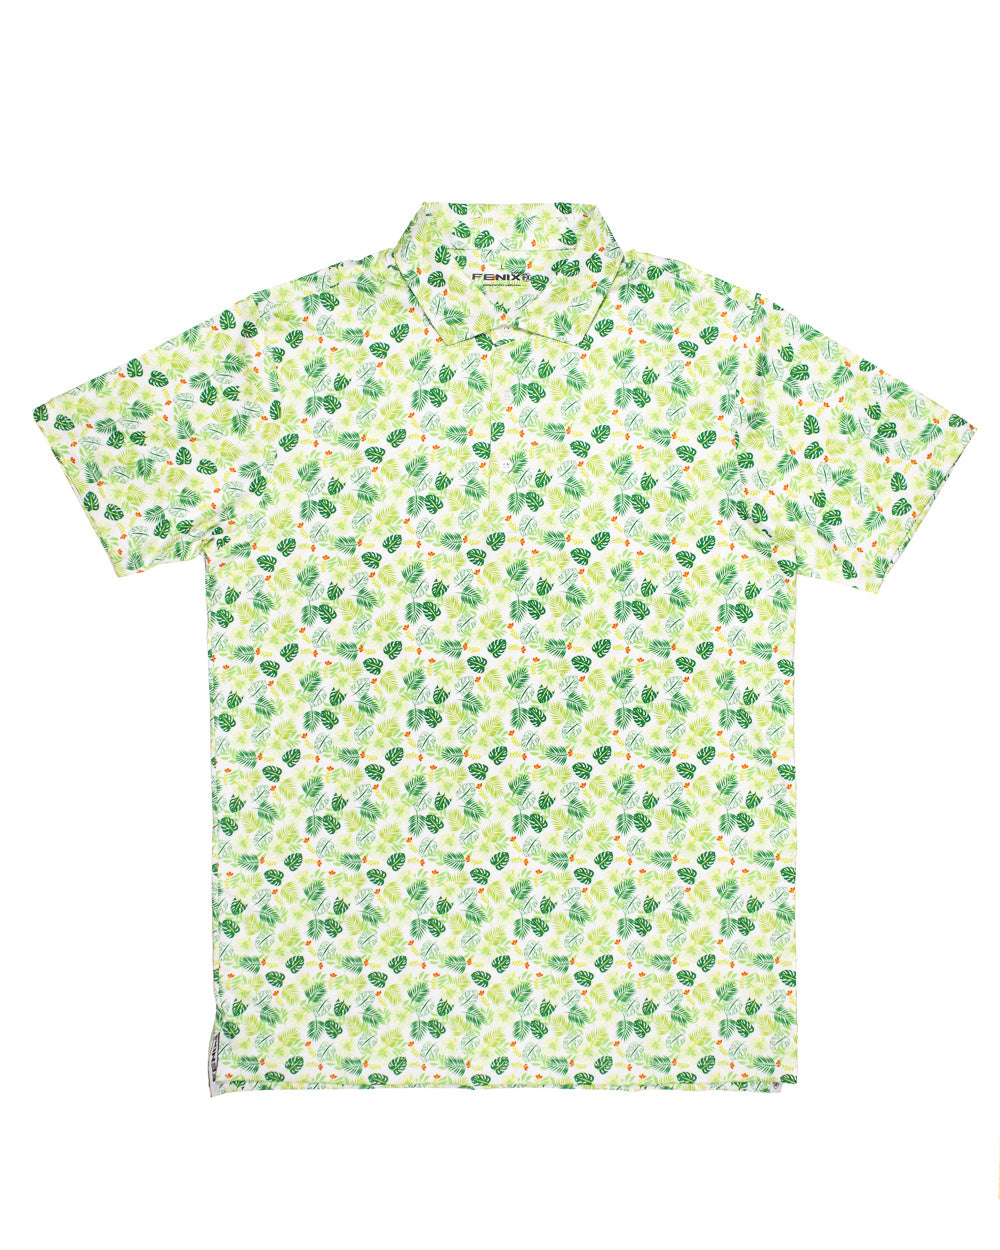 LAHAINO LIME GREEN □ フェニックス・エクセル ポロシャツ ラハイノ